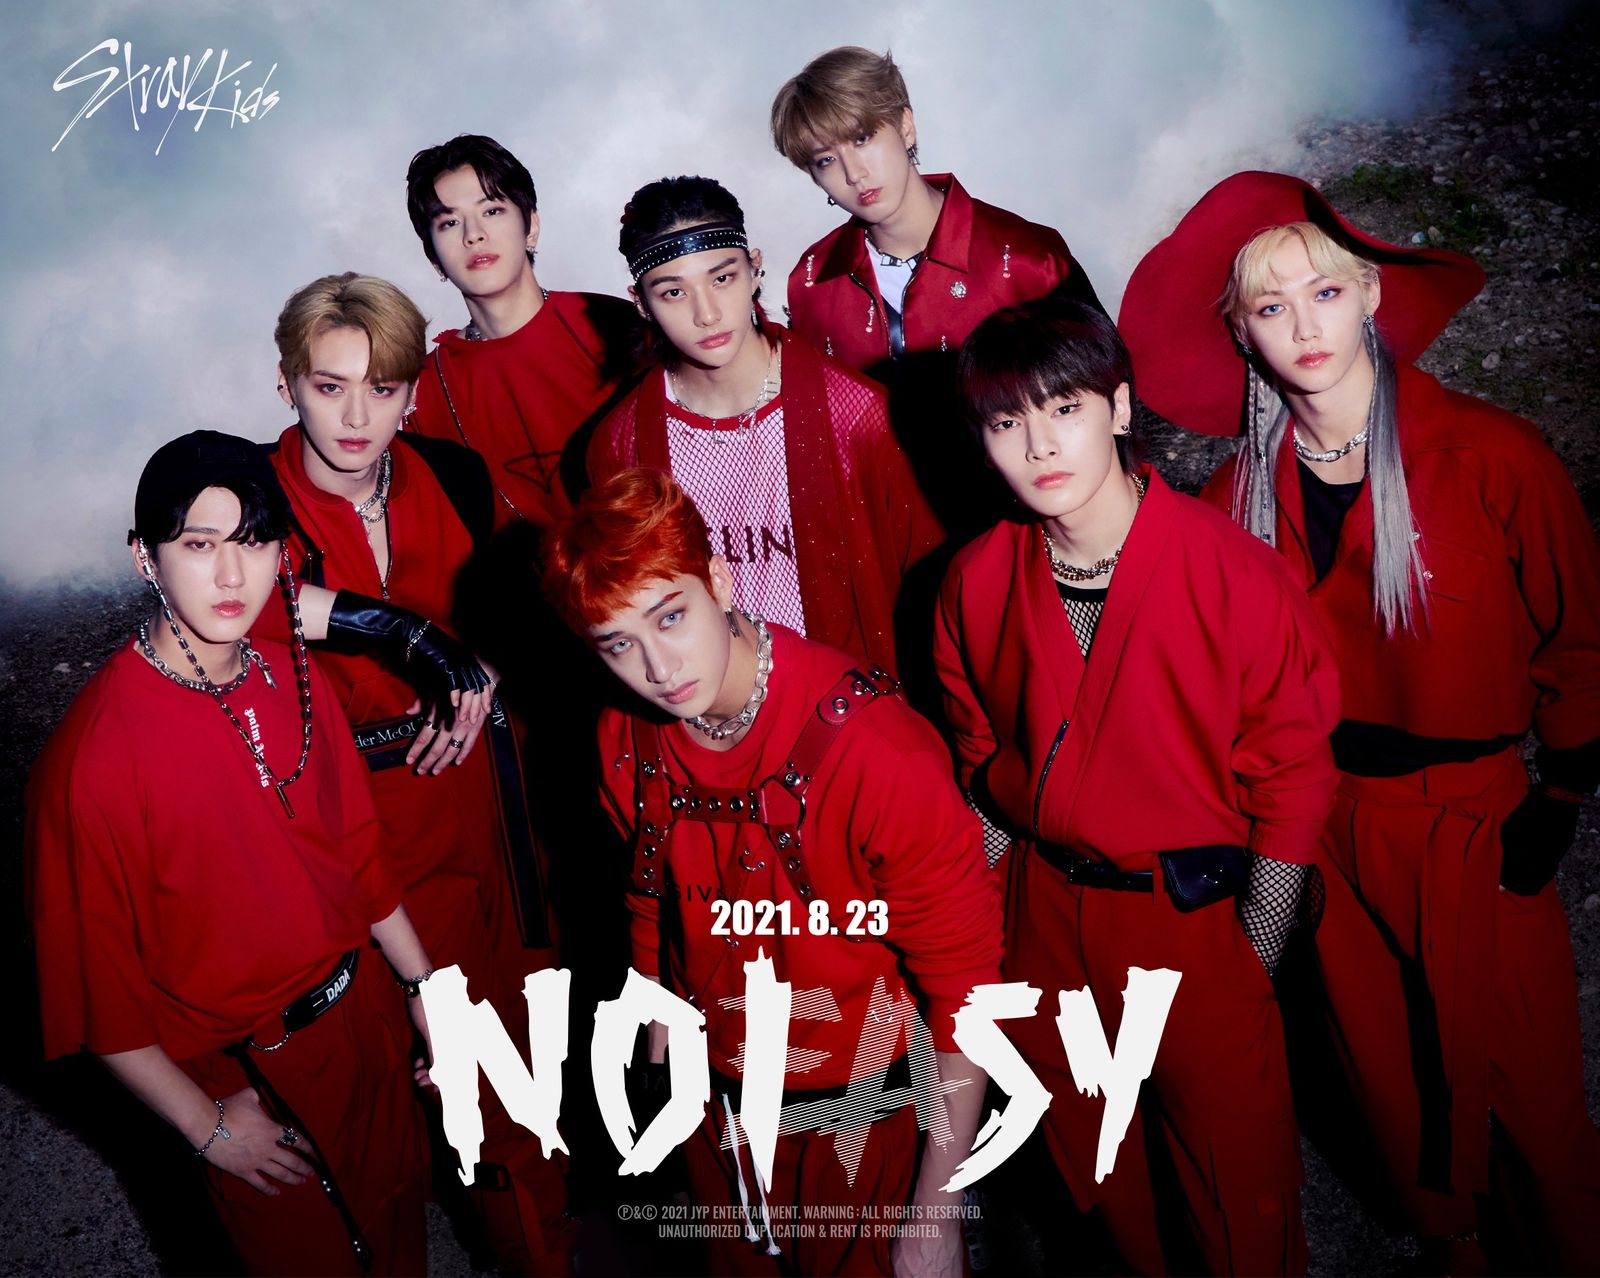 Stray Kids [NOEASY] CONCEPT PHOTOS | K-PopMag